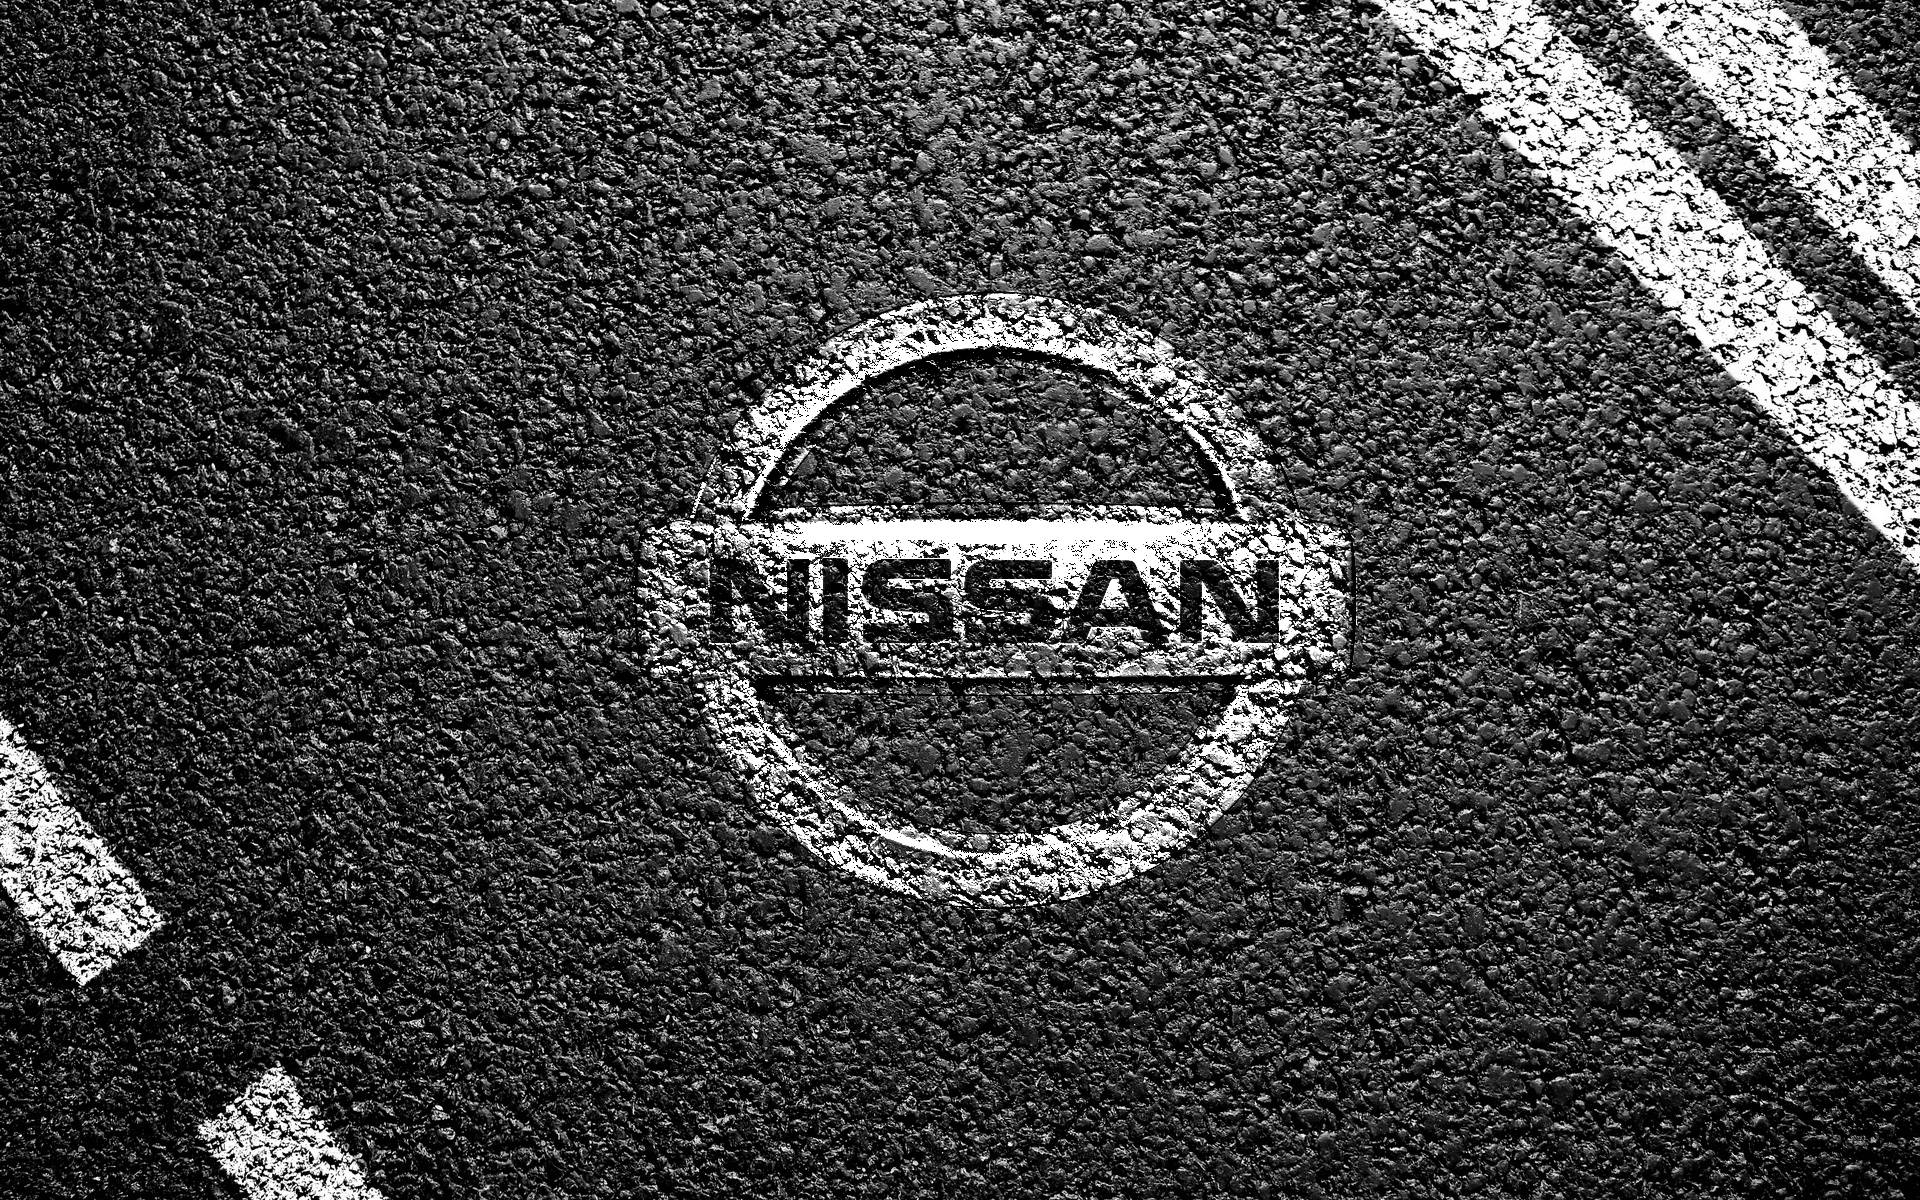 Logos For > Nissan Logo Wallpaper